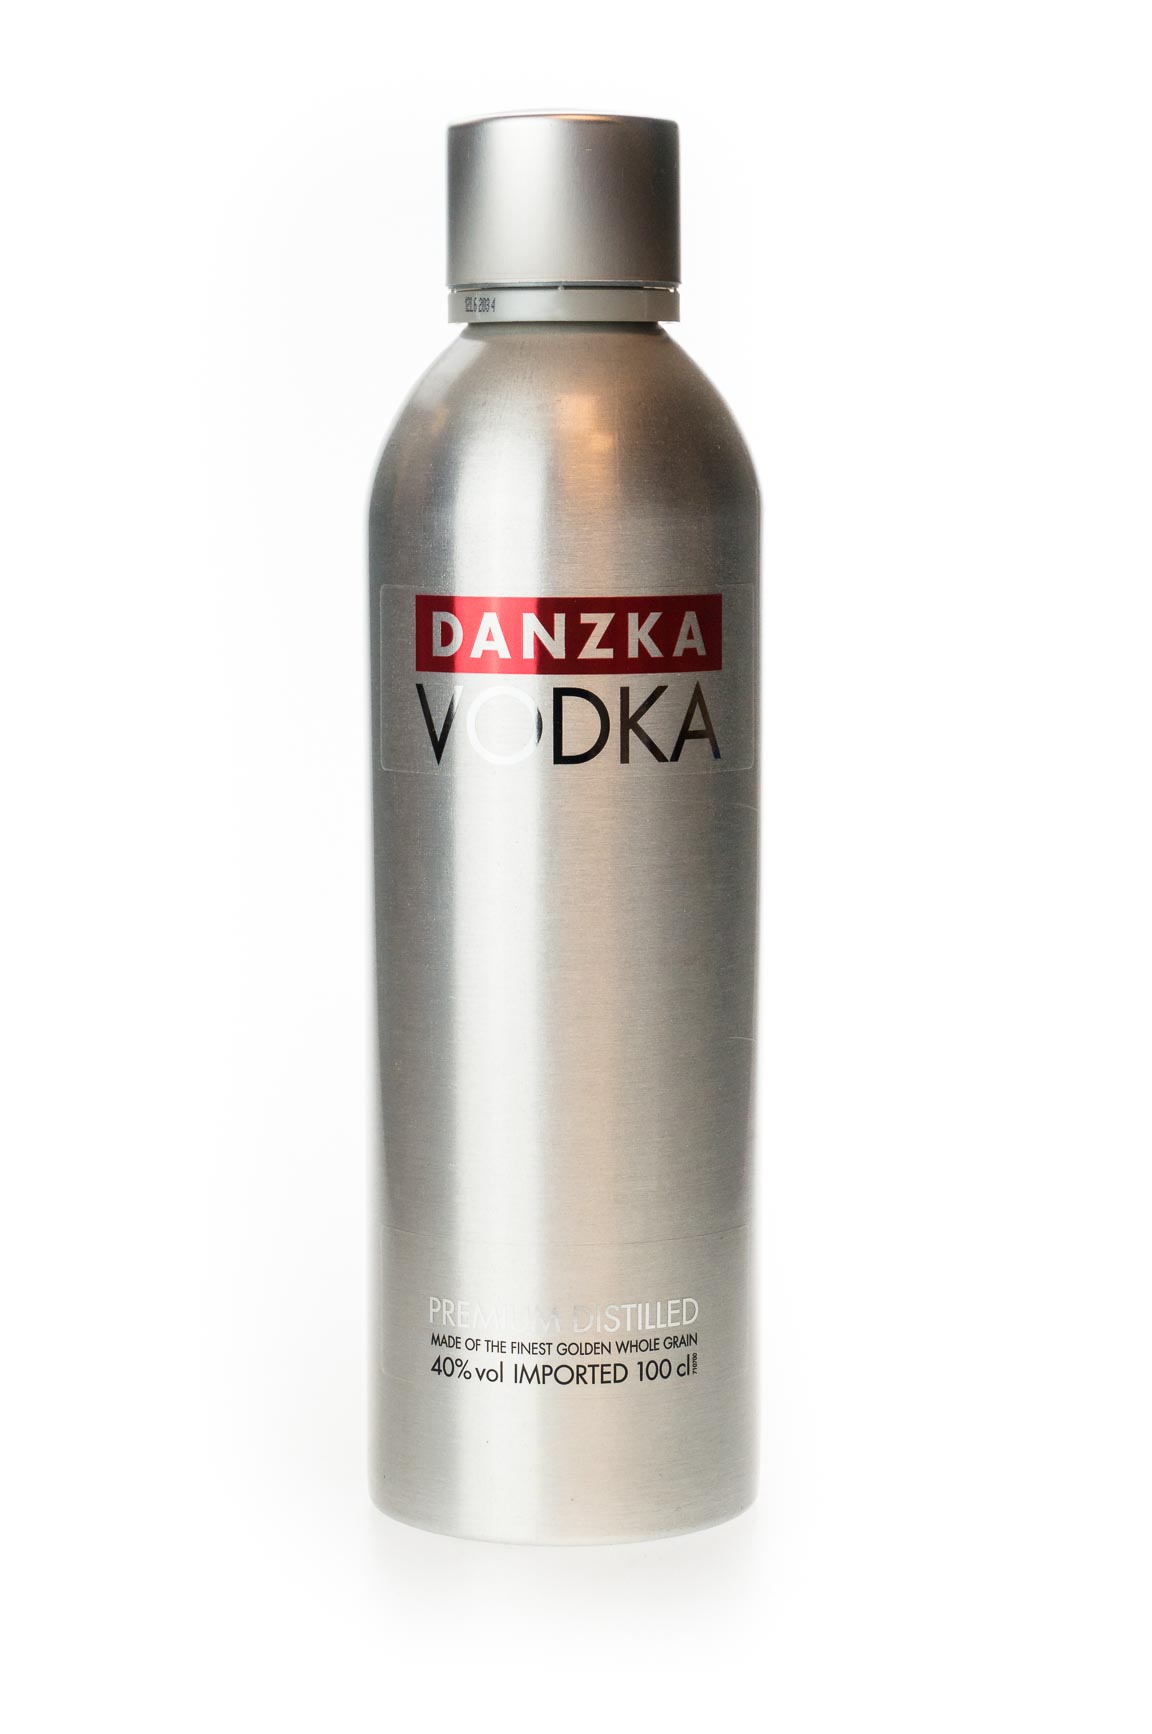 Danzka Vodka Premium Distilled - 1 Liter 40% vol